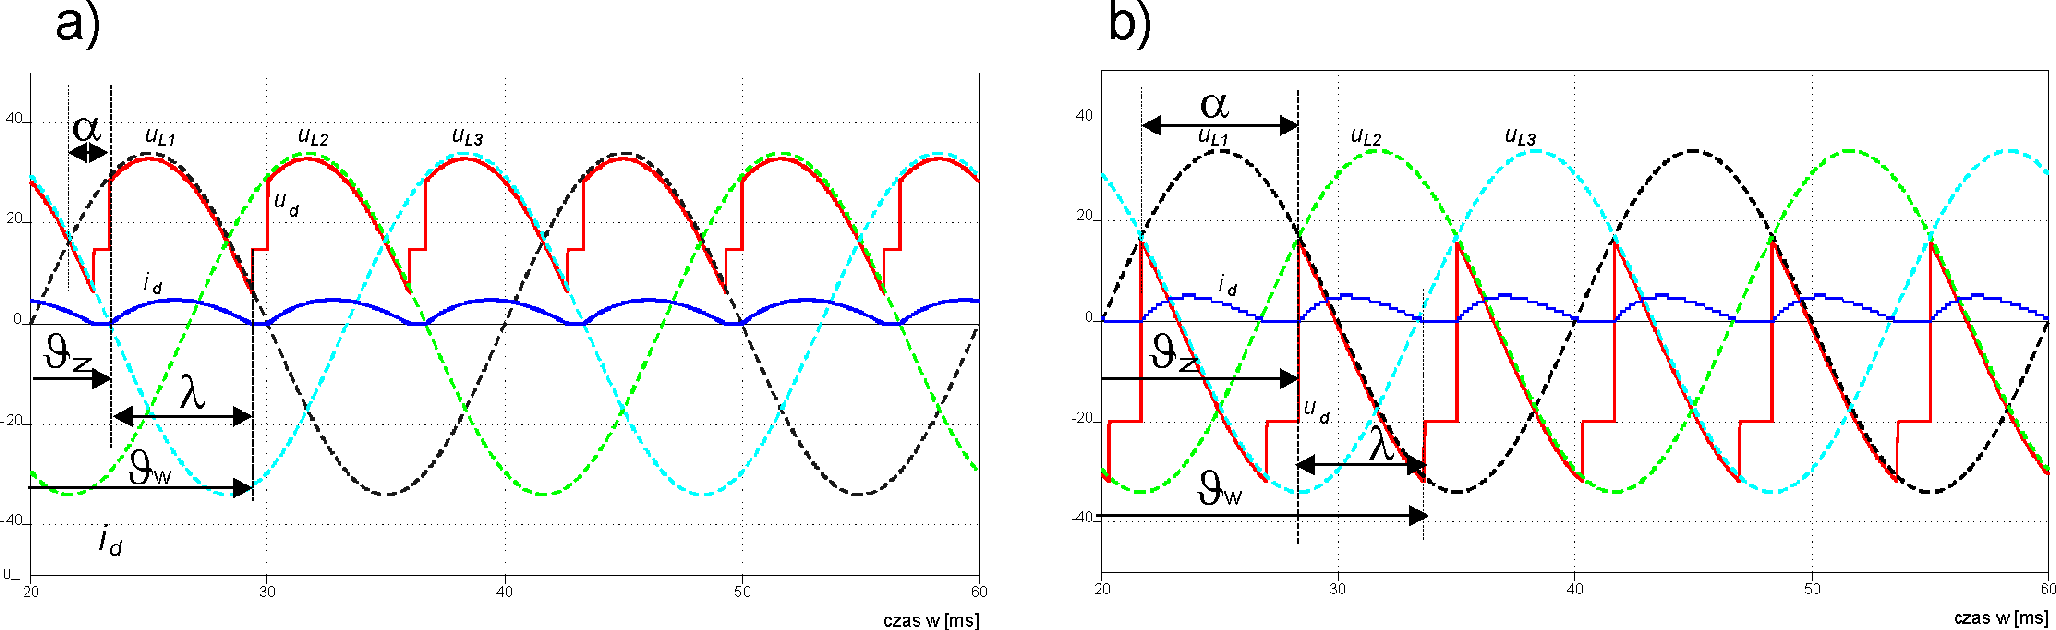 pulsowego: a) ϑ z 60, ε0,44; b) ϑz150, ε-0,58 Kąt załączenia ϑ z to w prostownikach sterowanych